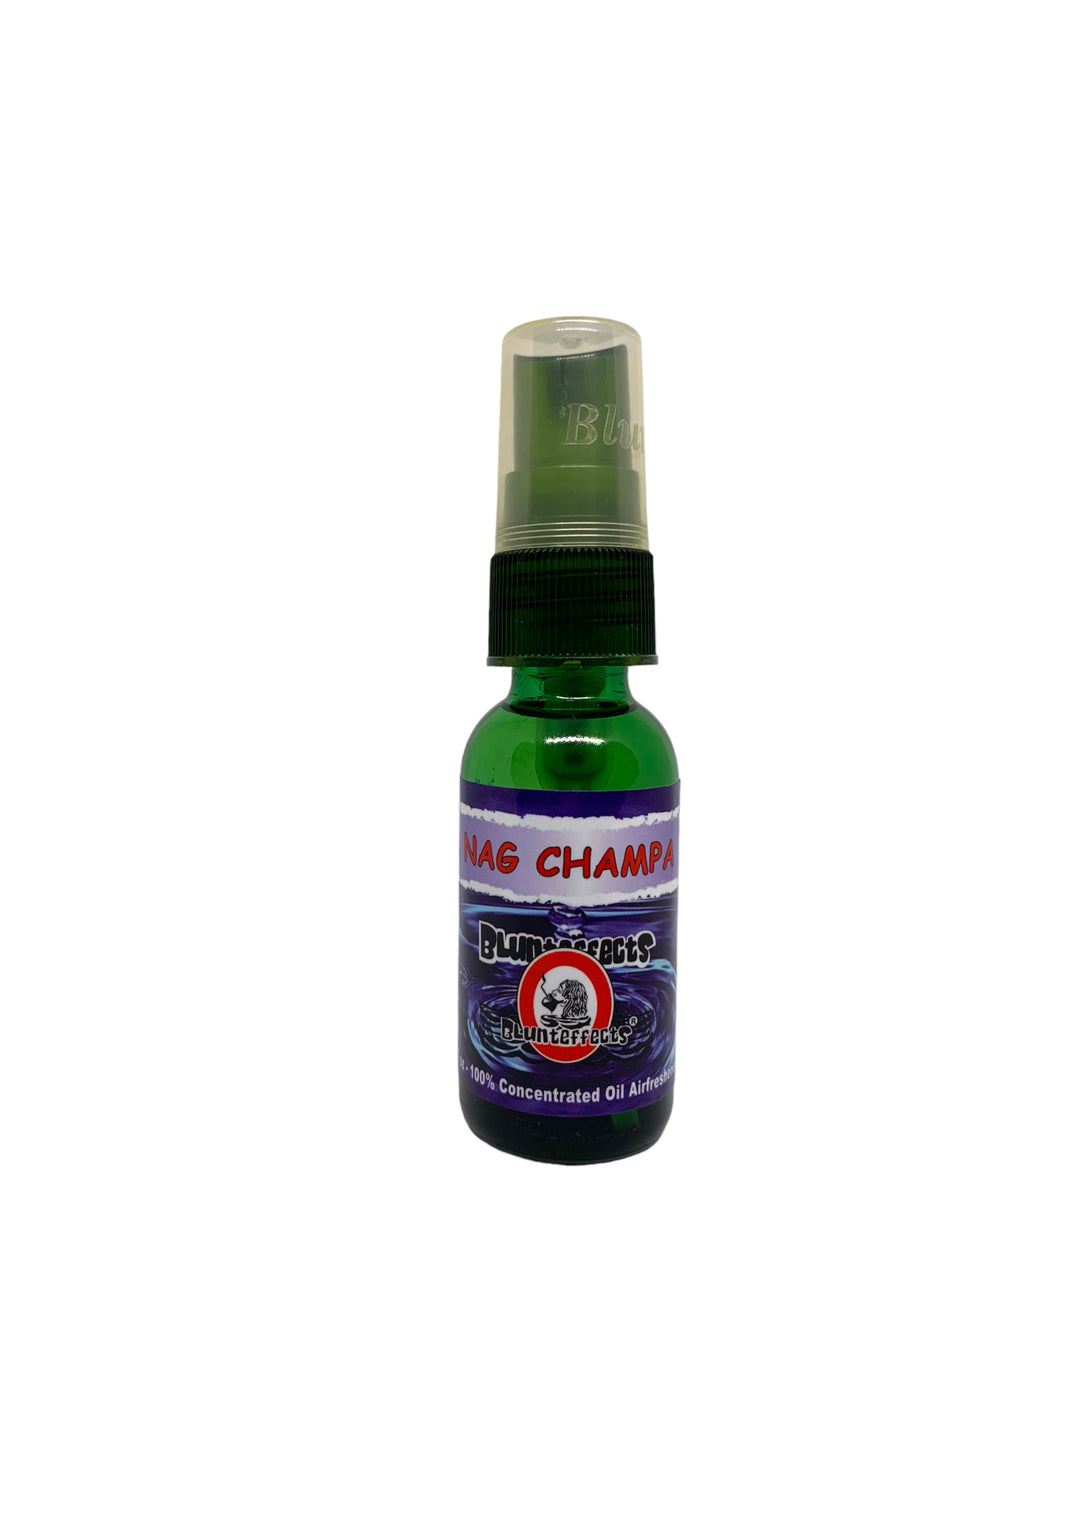 Blunteffects Nag Champa Spray Air-Freshener 1 OZ.